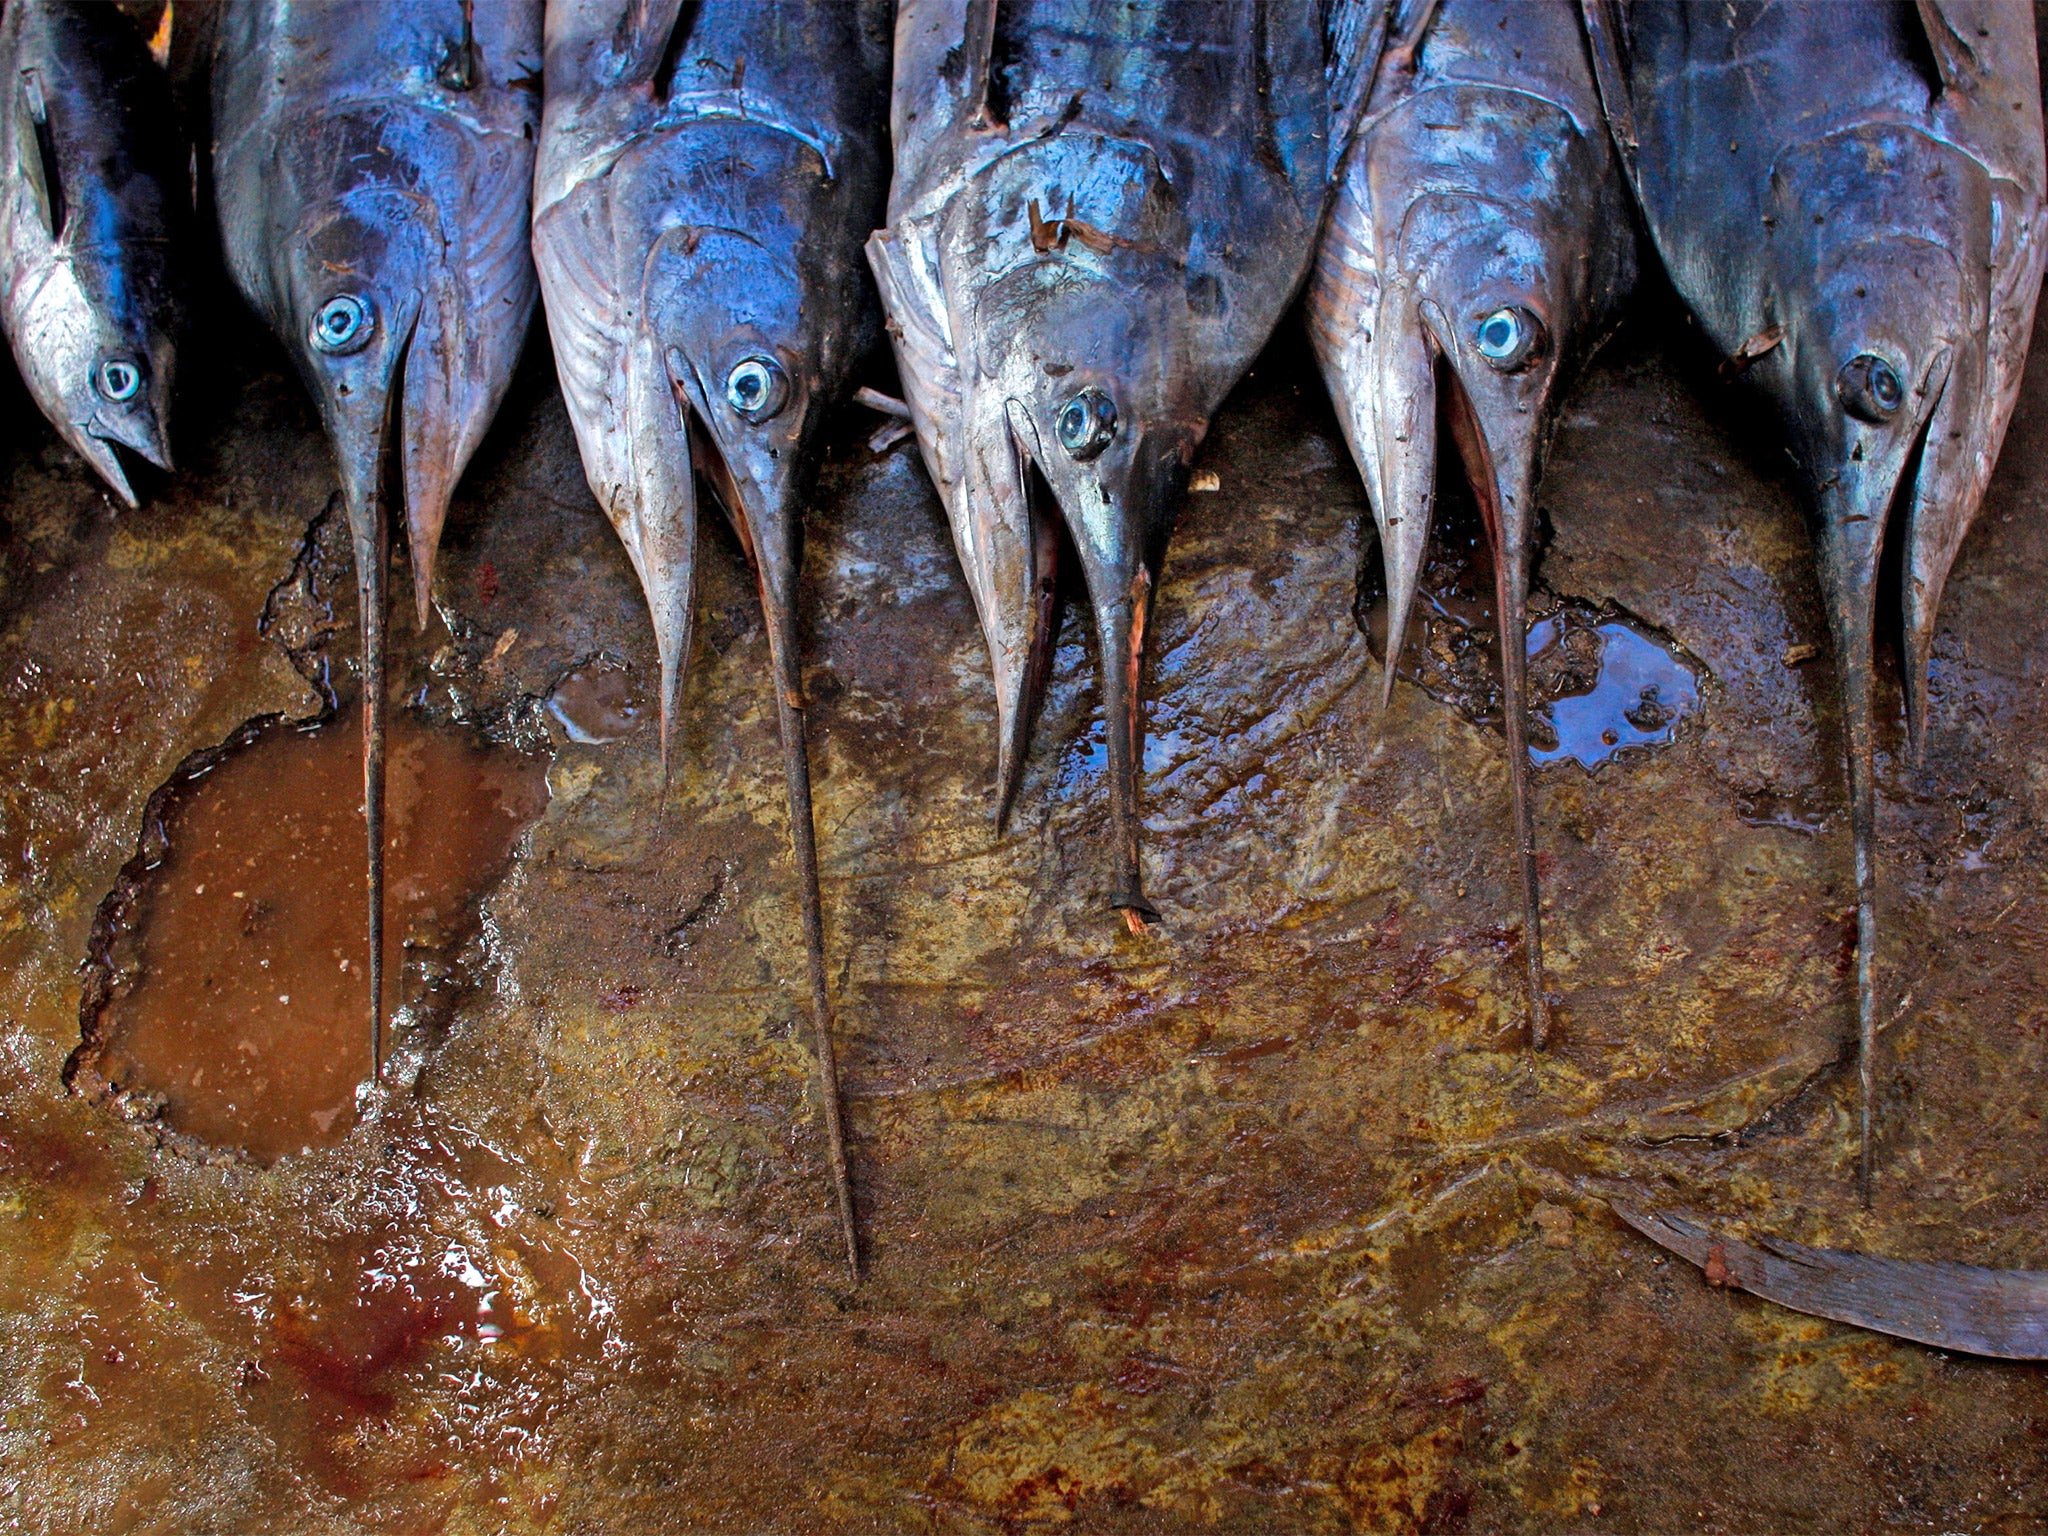 Freshly caught swordfish lined up for sale inside Mogadishu's fish market